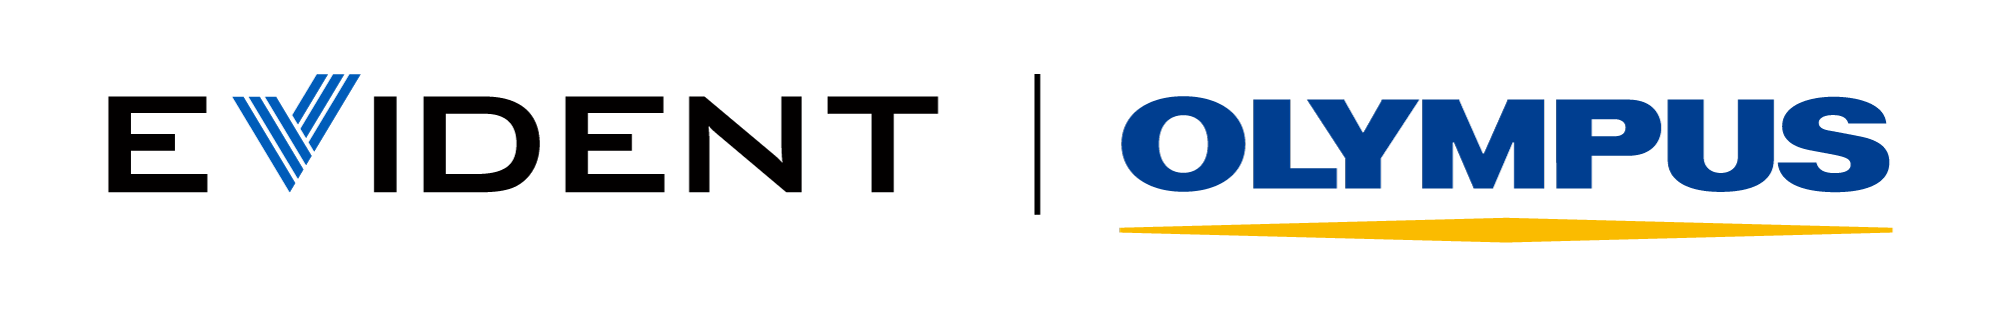 EVIDENT Olympus Logo Horizontal